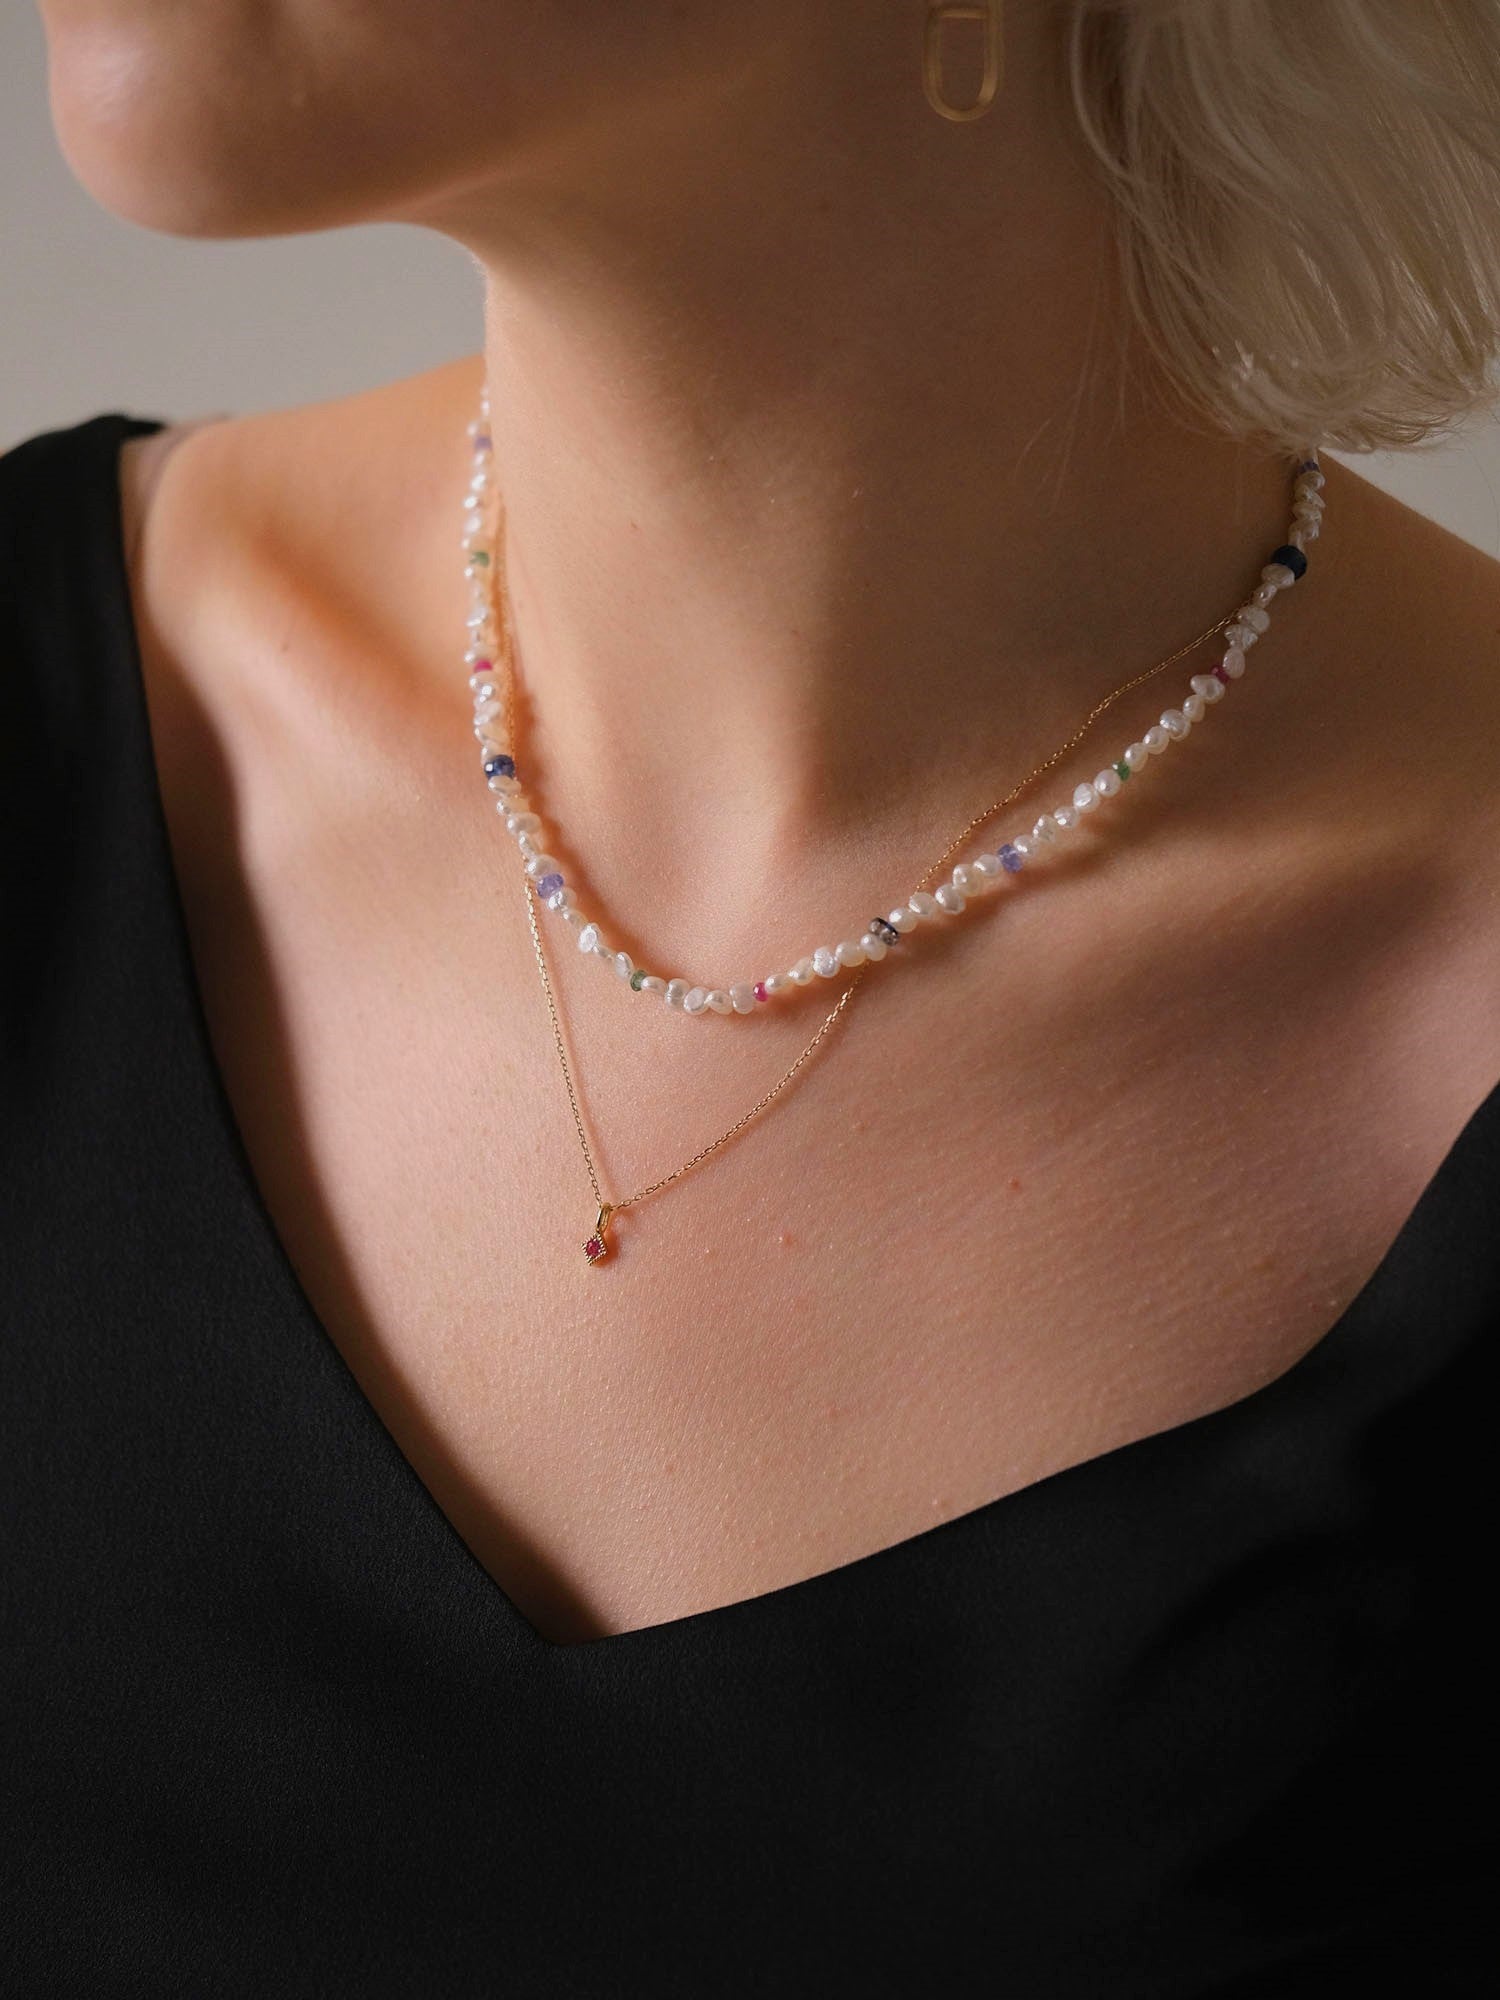 Pearl & Multi Gemstone Station Necklace (White)